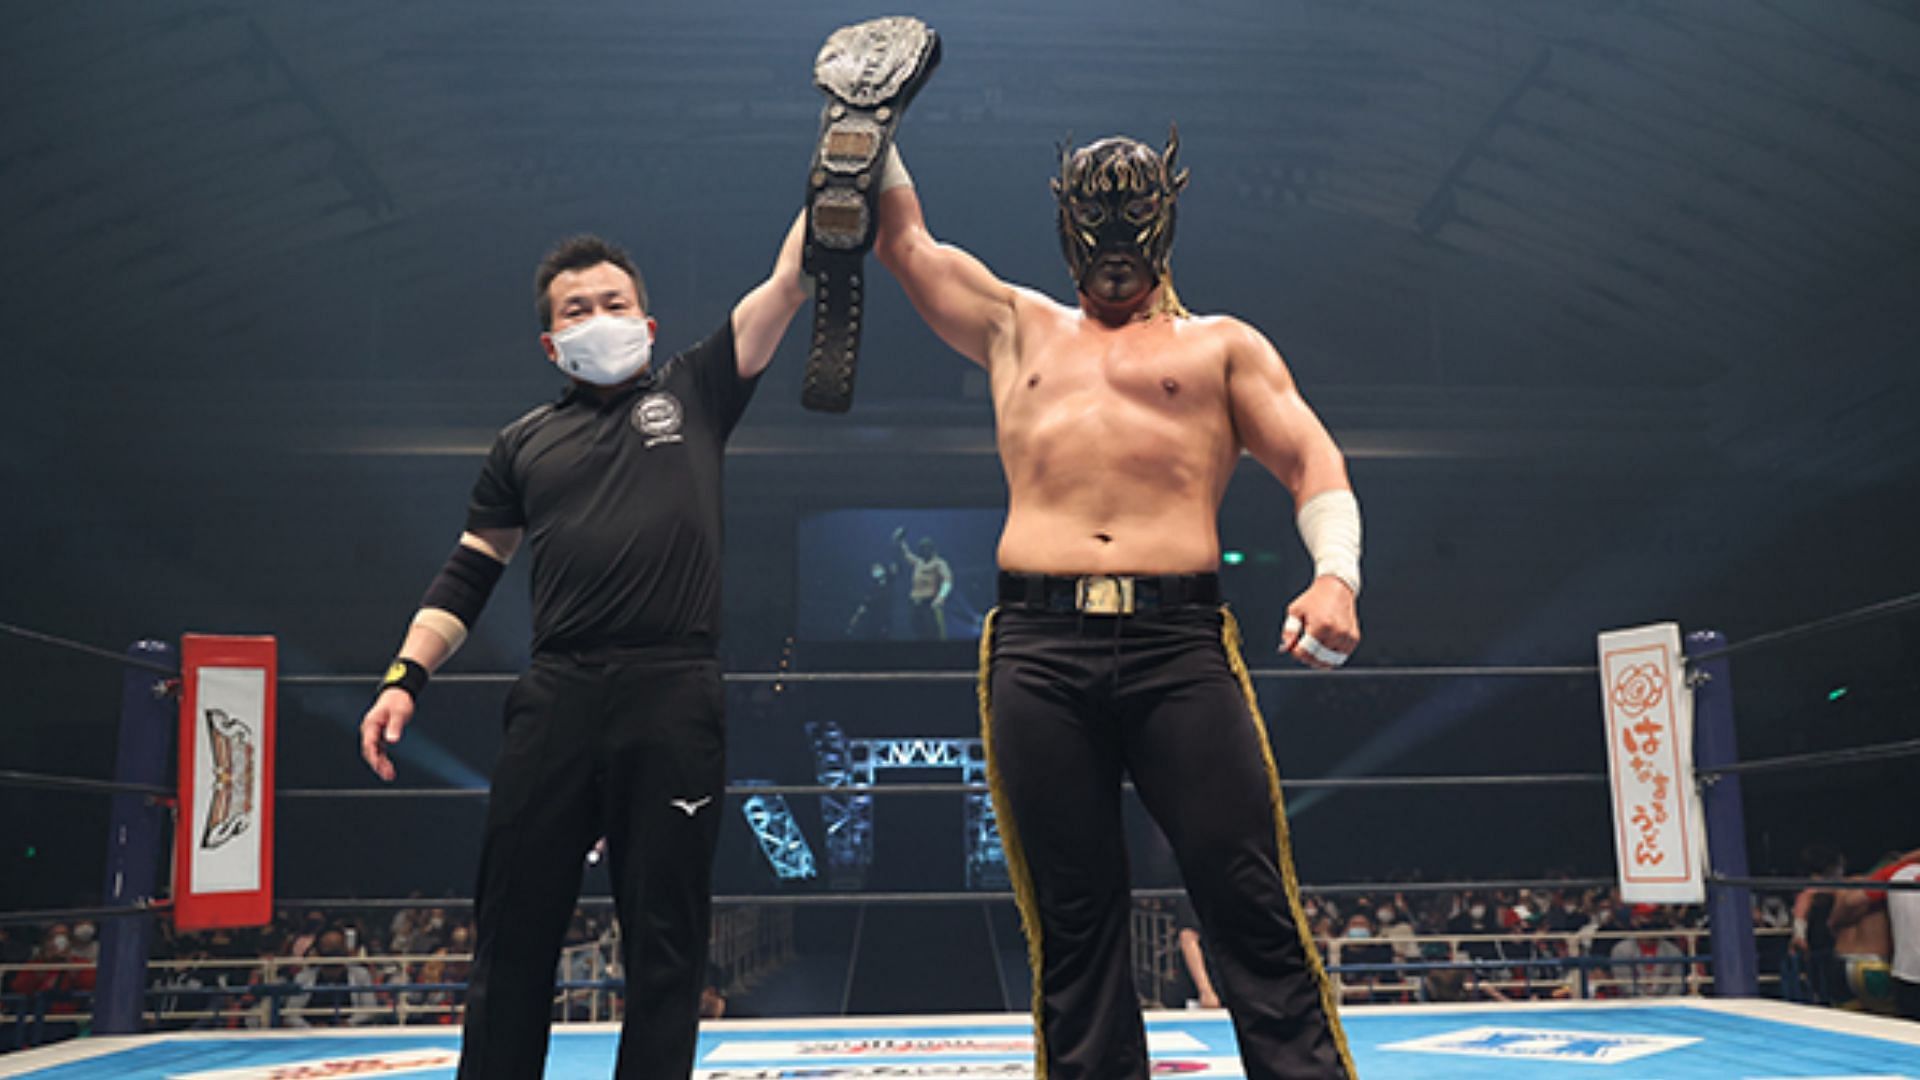 El Desperado twotime IWGP Jr. Heavyweight Champion by beating